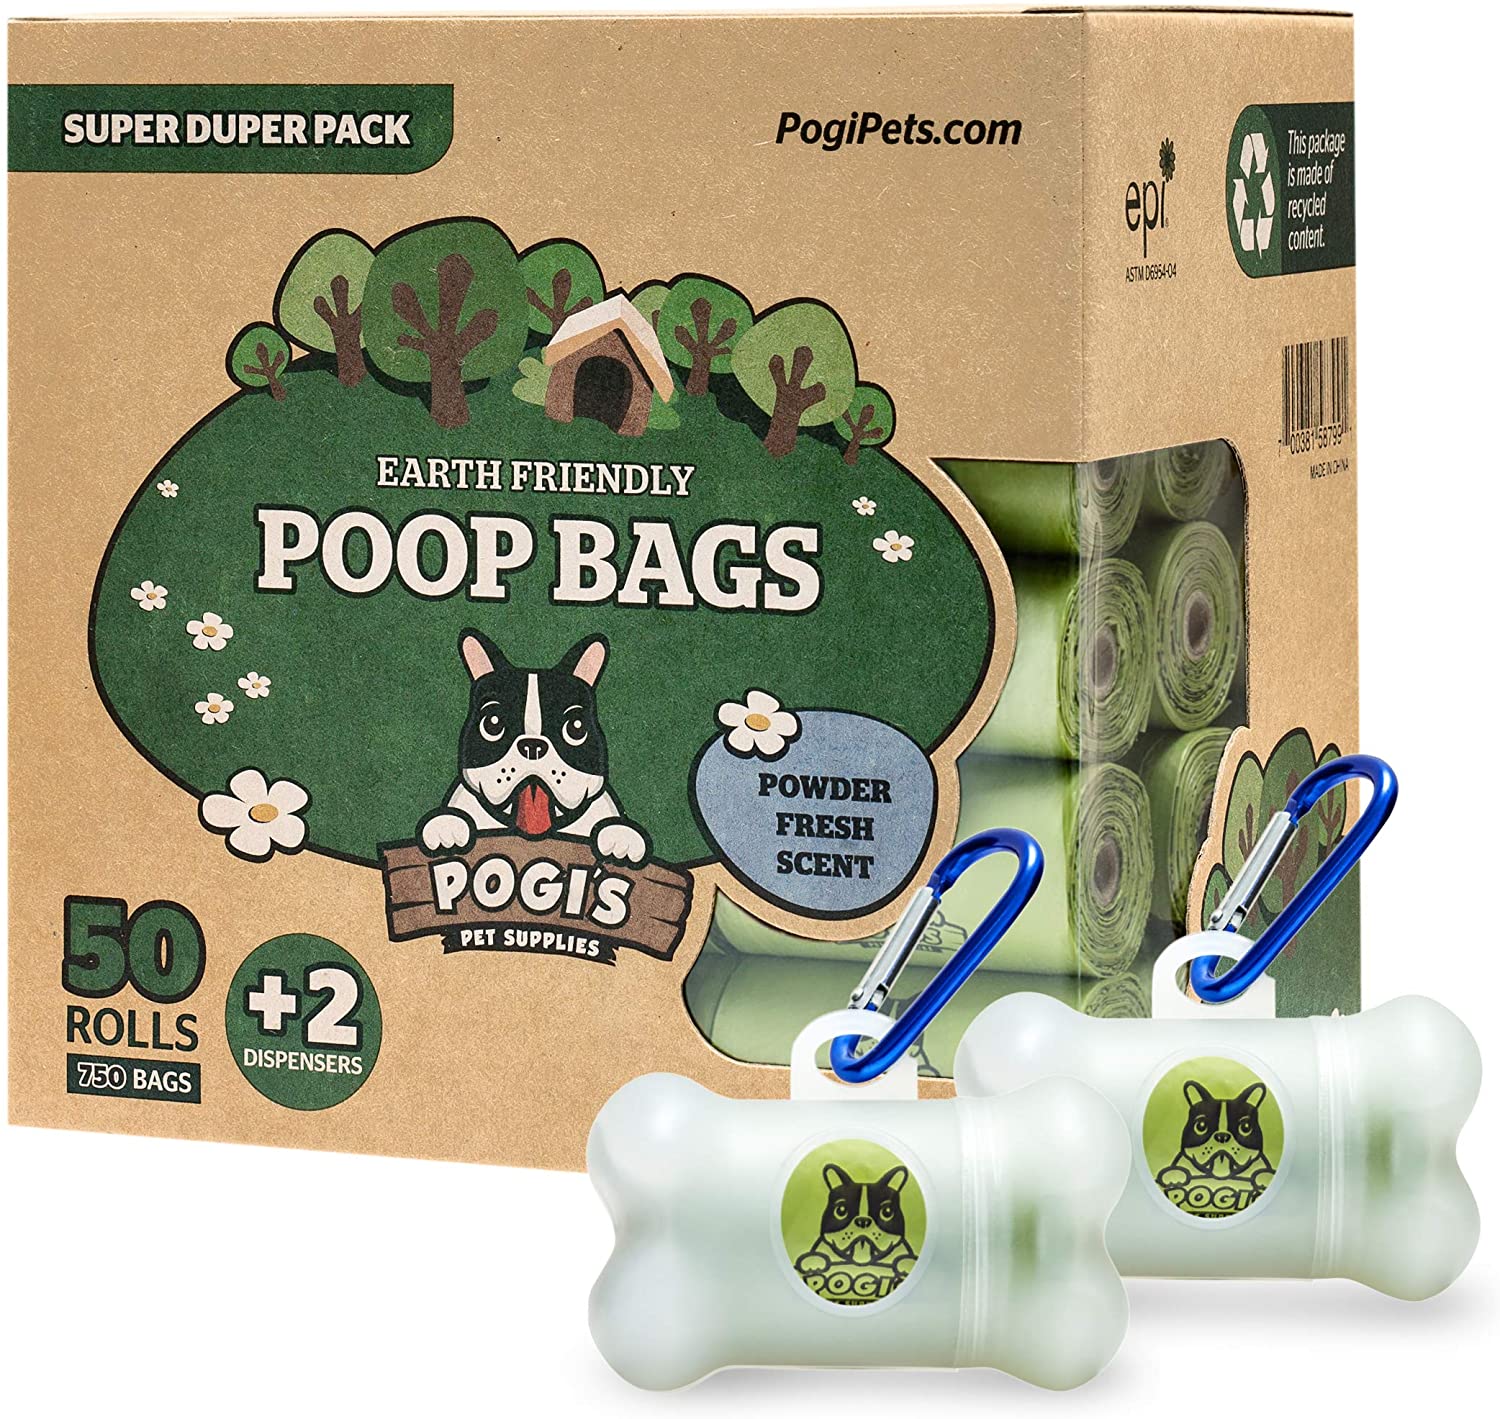  Pogi's Poop Bags - Bolsas para excremento de Perro - 50 Rollos (750 Bolsas) + 2 Dispensadores - Grandes, Biodegradables, Perfumadas, Herméticas 